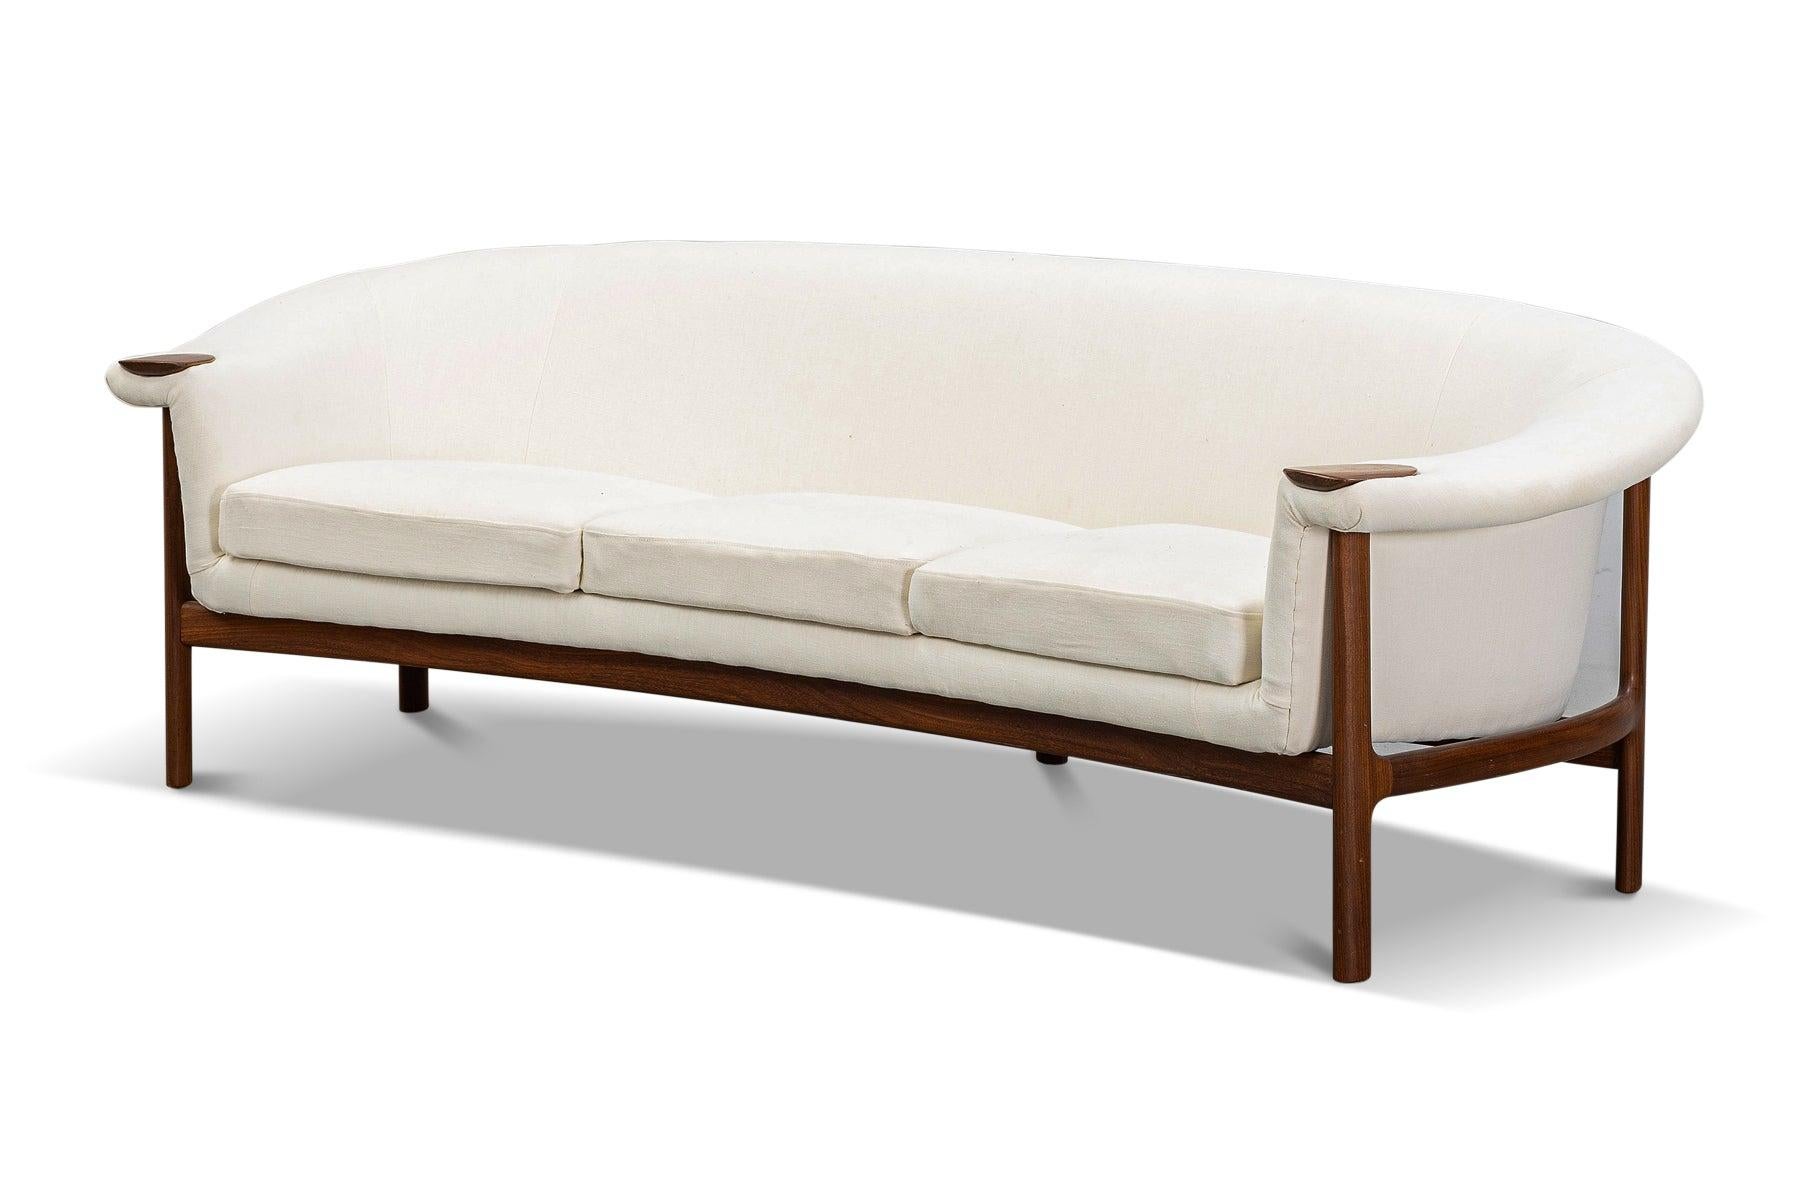 20th Century Johannes Andersen Curved Danish Modern Sofa in Walnut For Sale